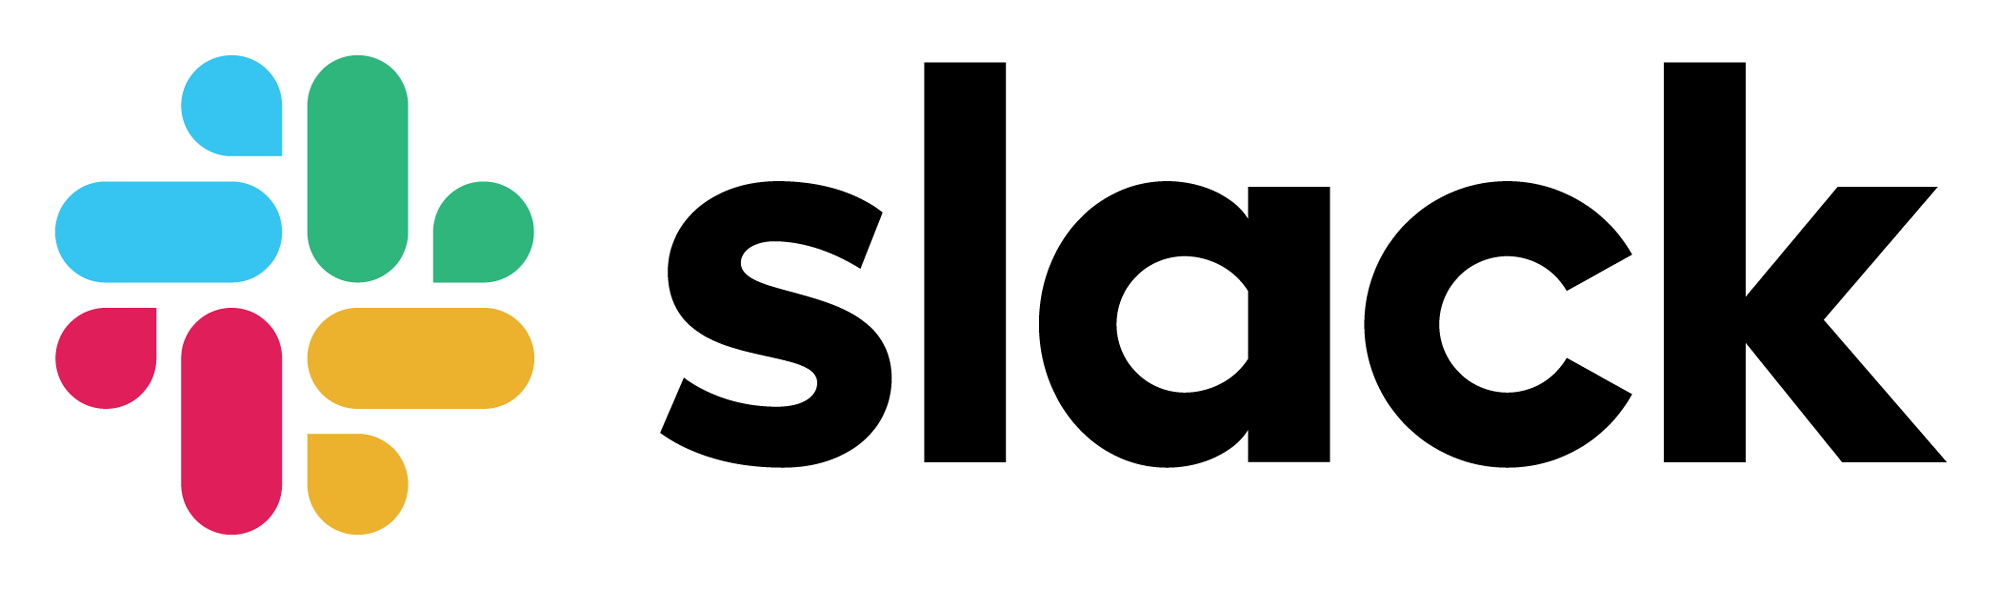 Slack Brand Logo - Brand New: New Logo and Identity for Slack by Pentagram and In-house